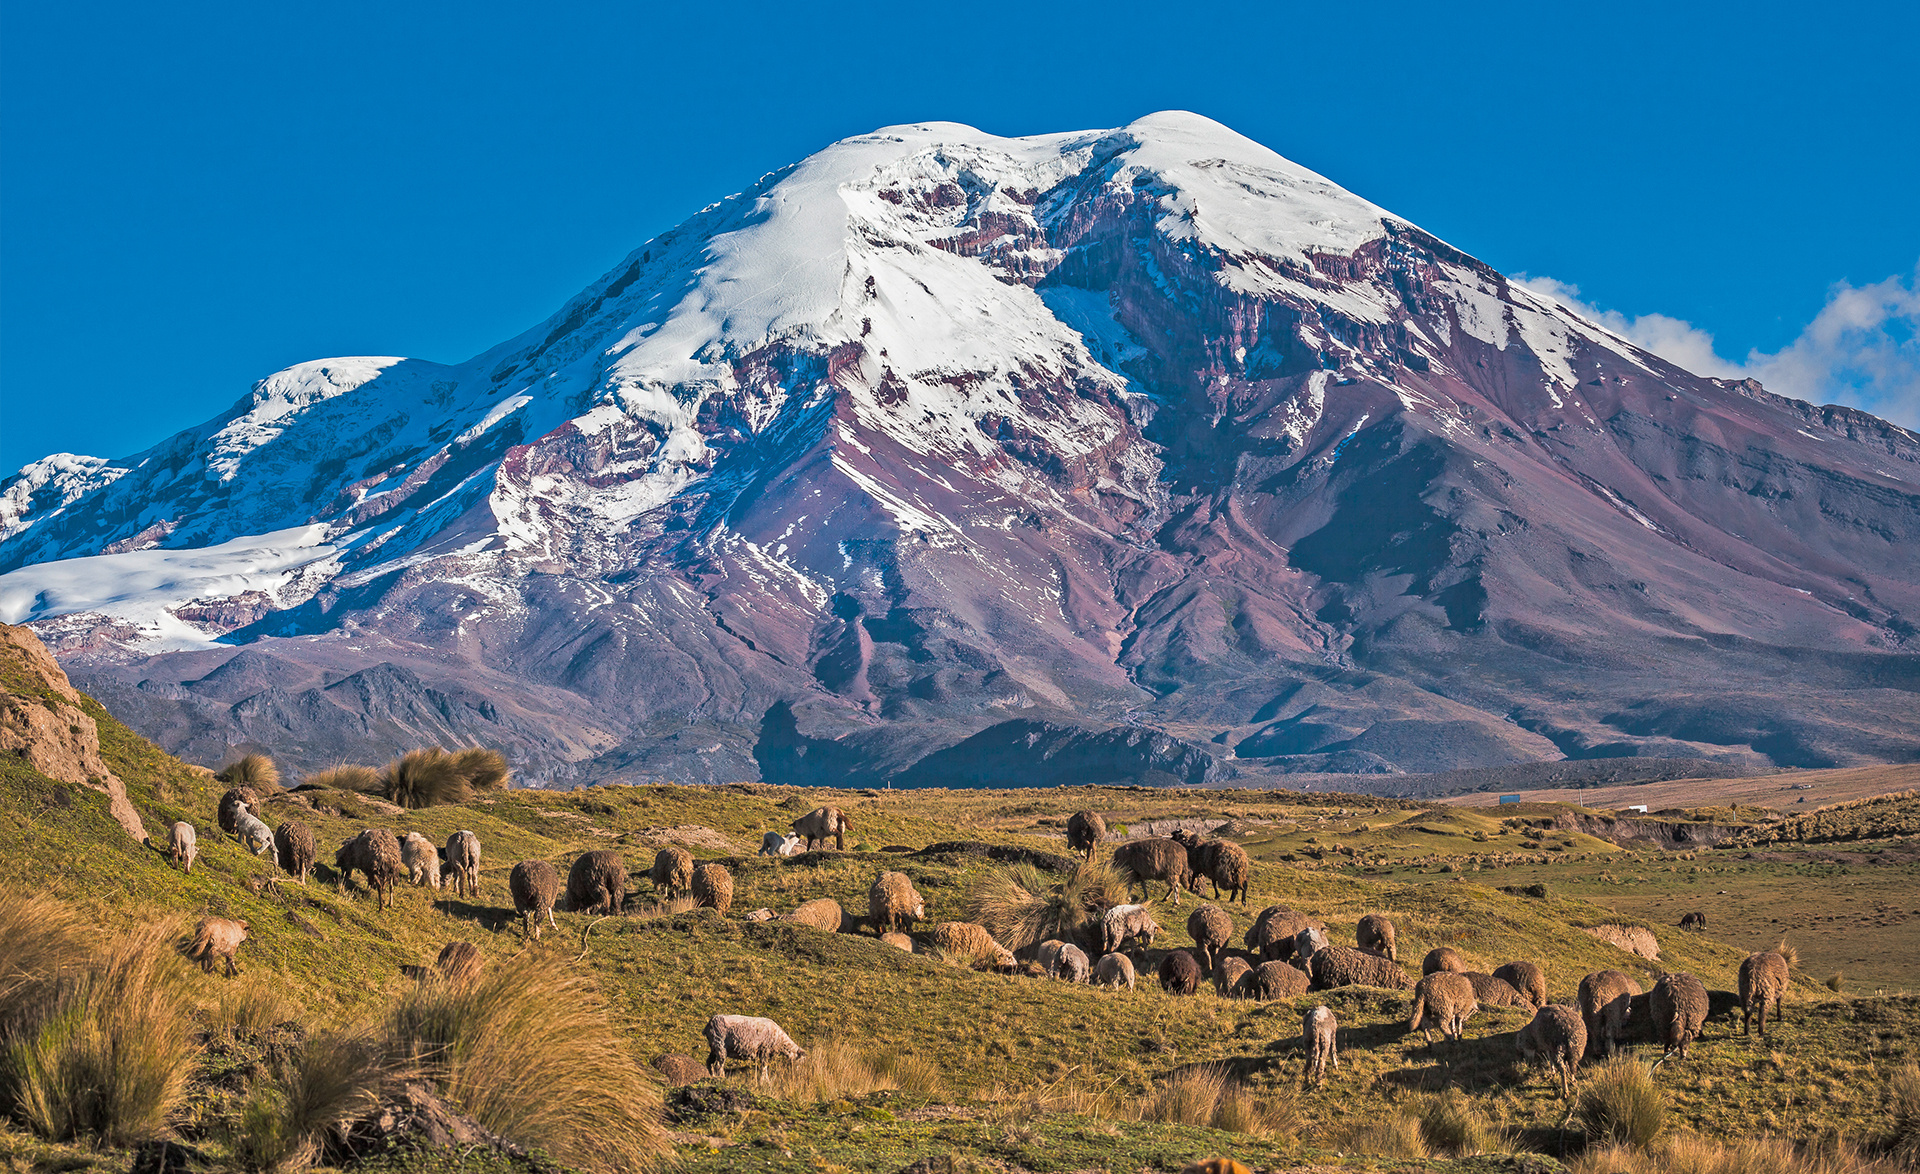 Ecuador: Chimborazo, a currently inactive stratovolcano in the Cordillera Occidental range of the Andes. 1920x1180 HD Wallpaper.